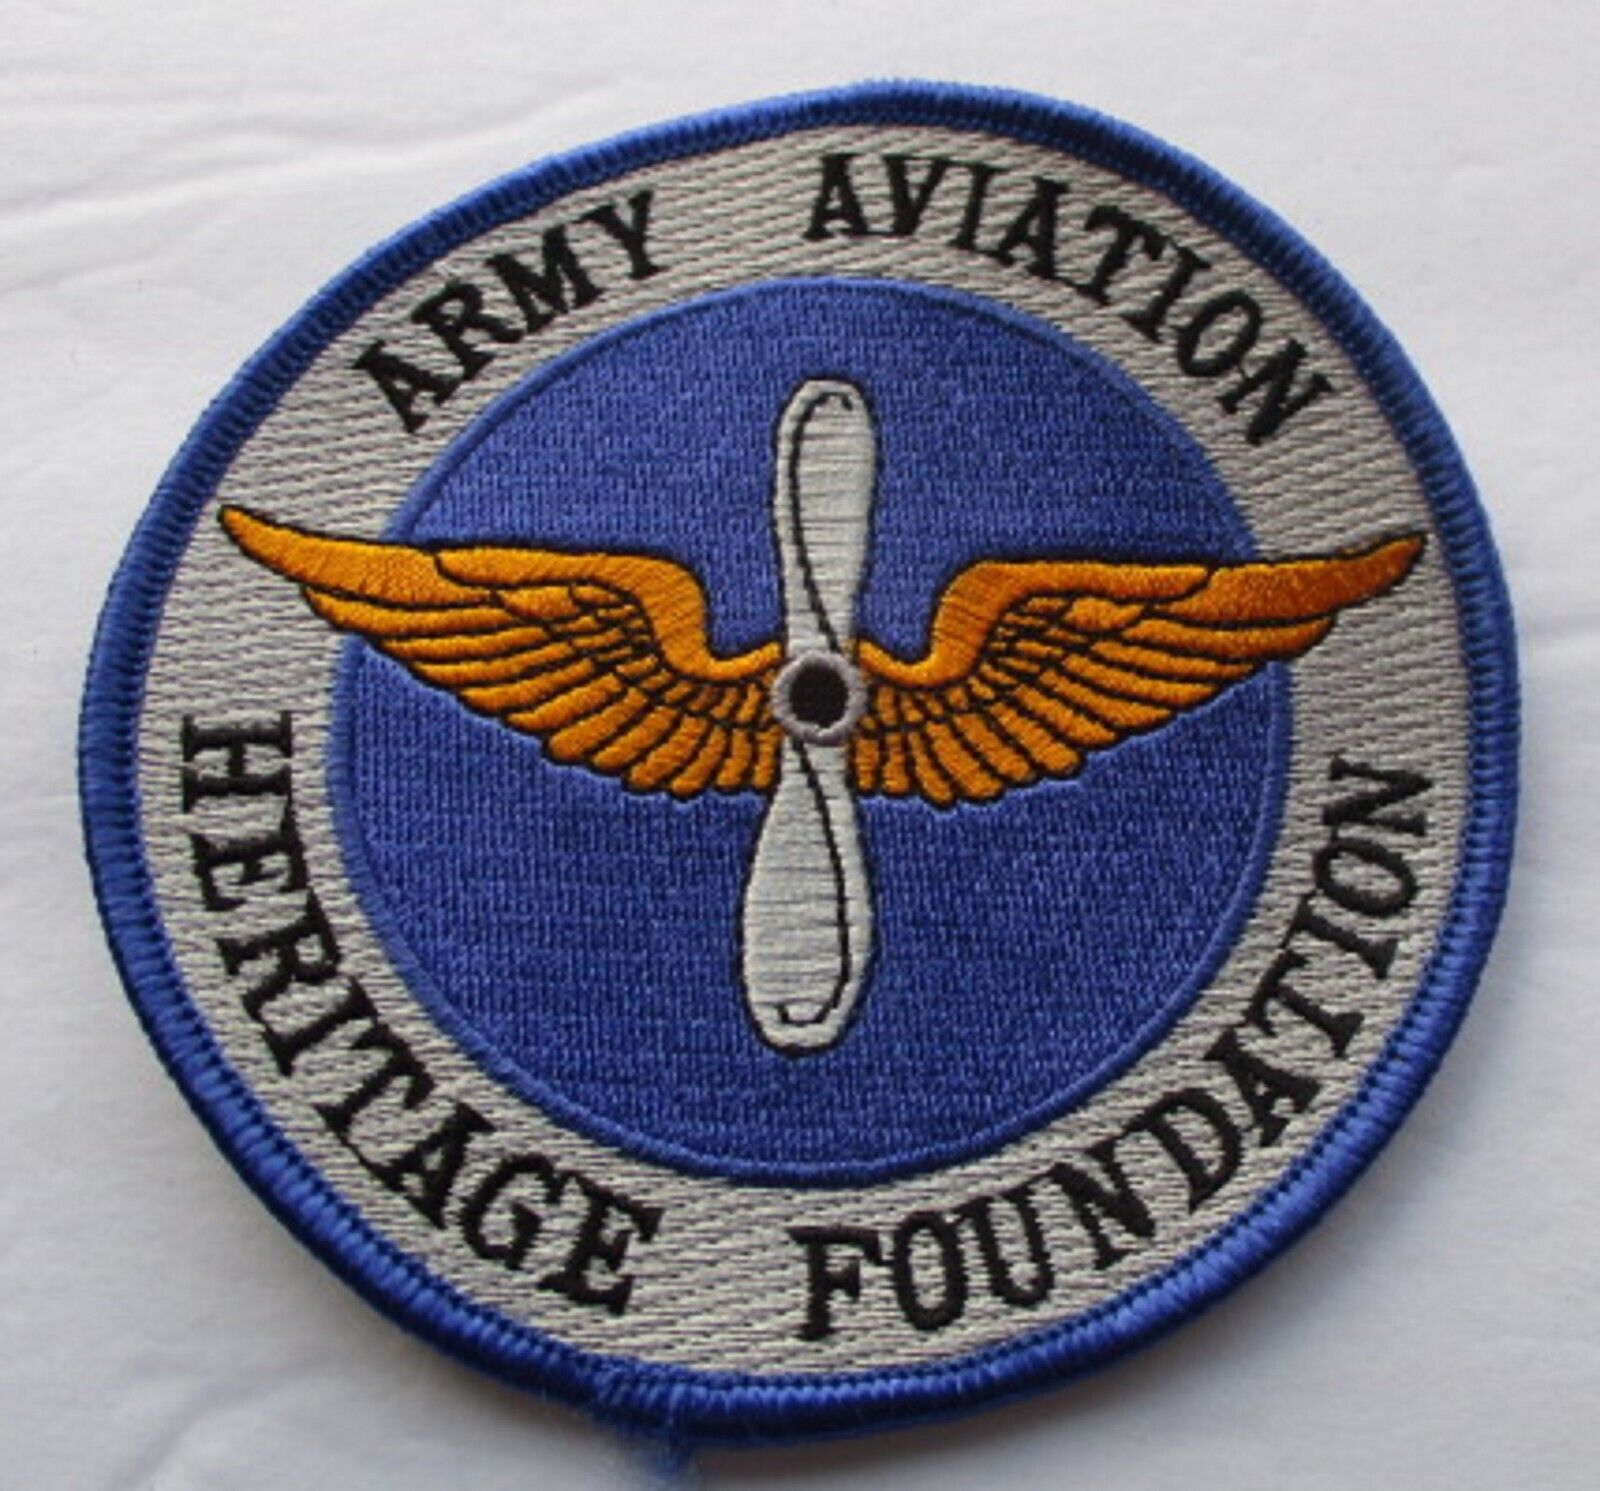 USAF - ARMY ACIATION HERITAGE FOUNDATION PATCH